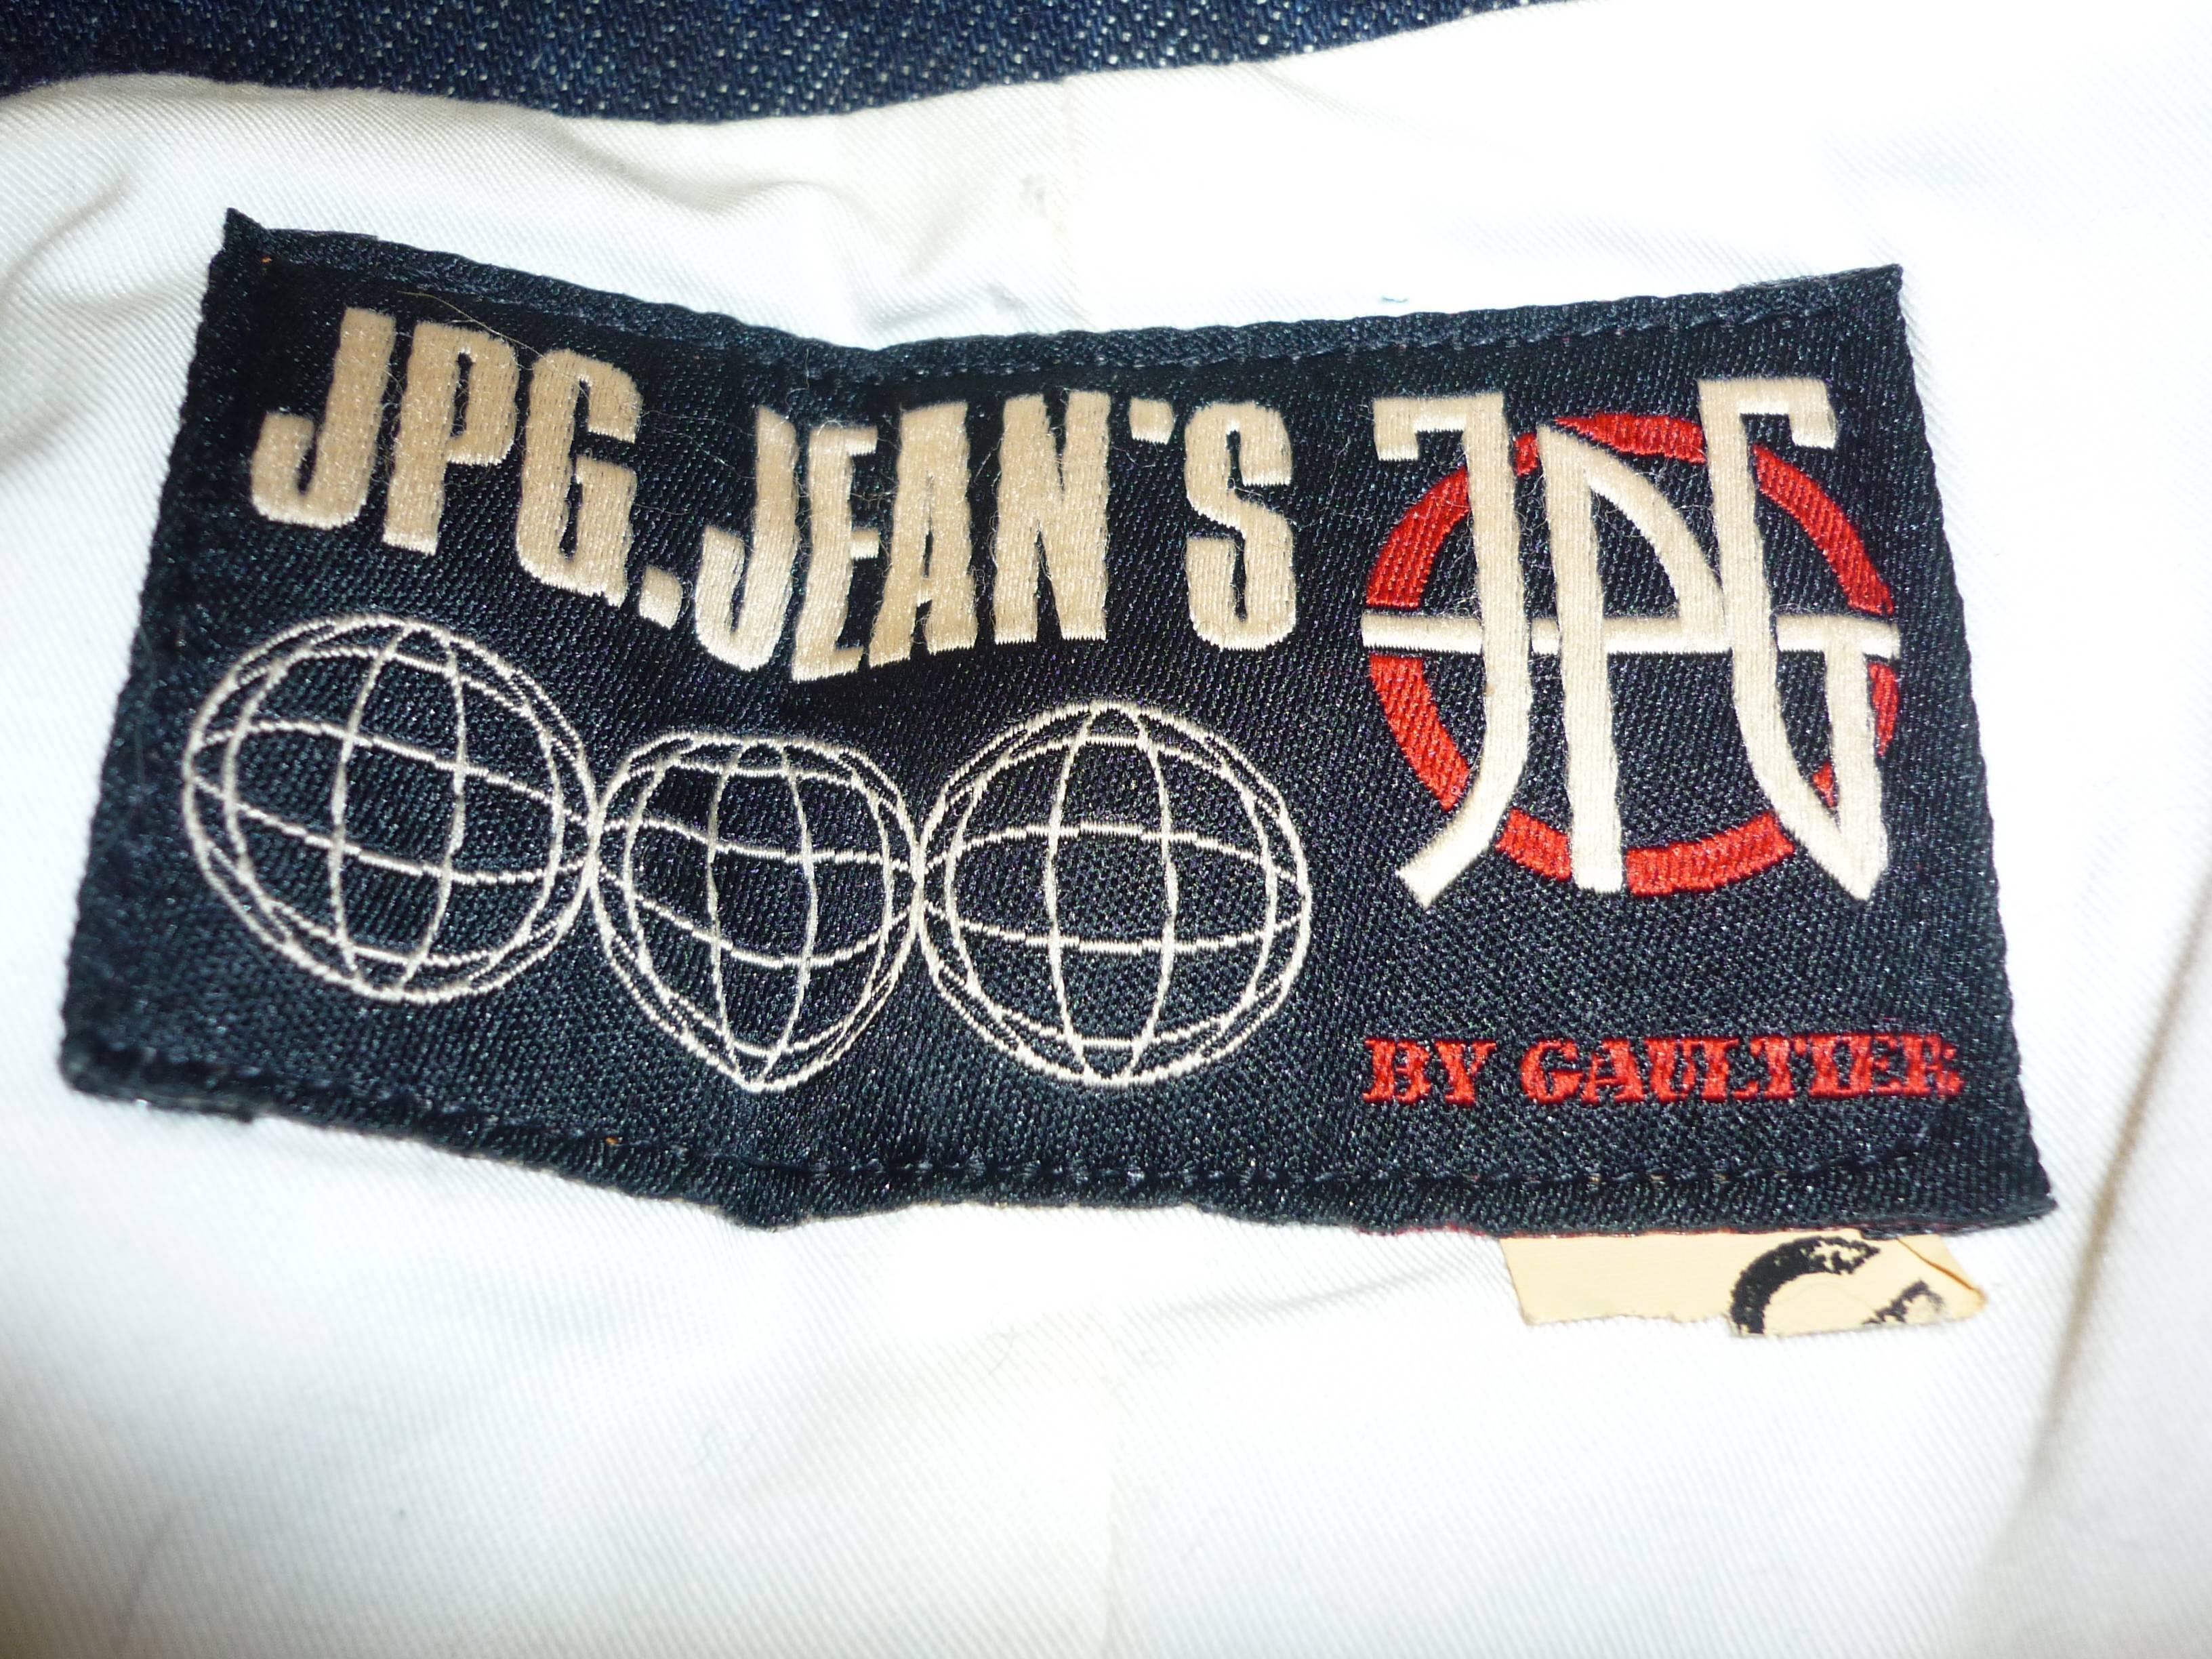 Stunning 1980s JPG.Jean's by Gaultier Vest (S) 1